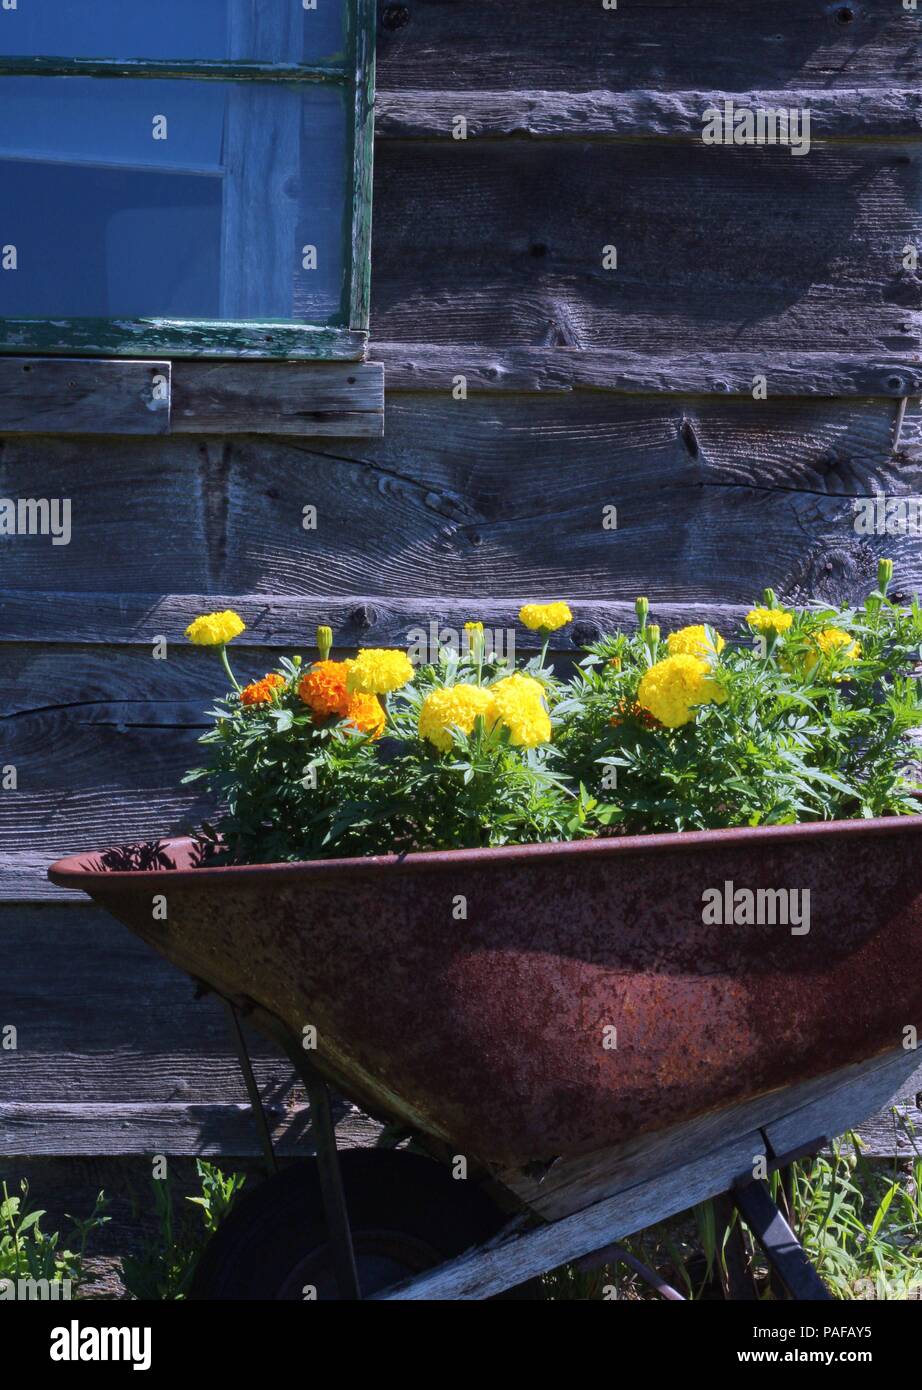 Flores de verano, Púrpura Irlandesa, Hosta, tulipanes, Jardín Botánico, Lago de China, China, Maine, EE.UU. Foto de stock